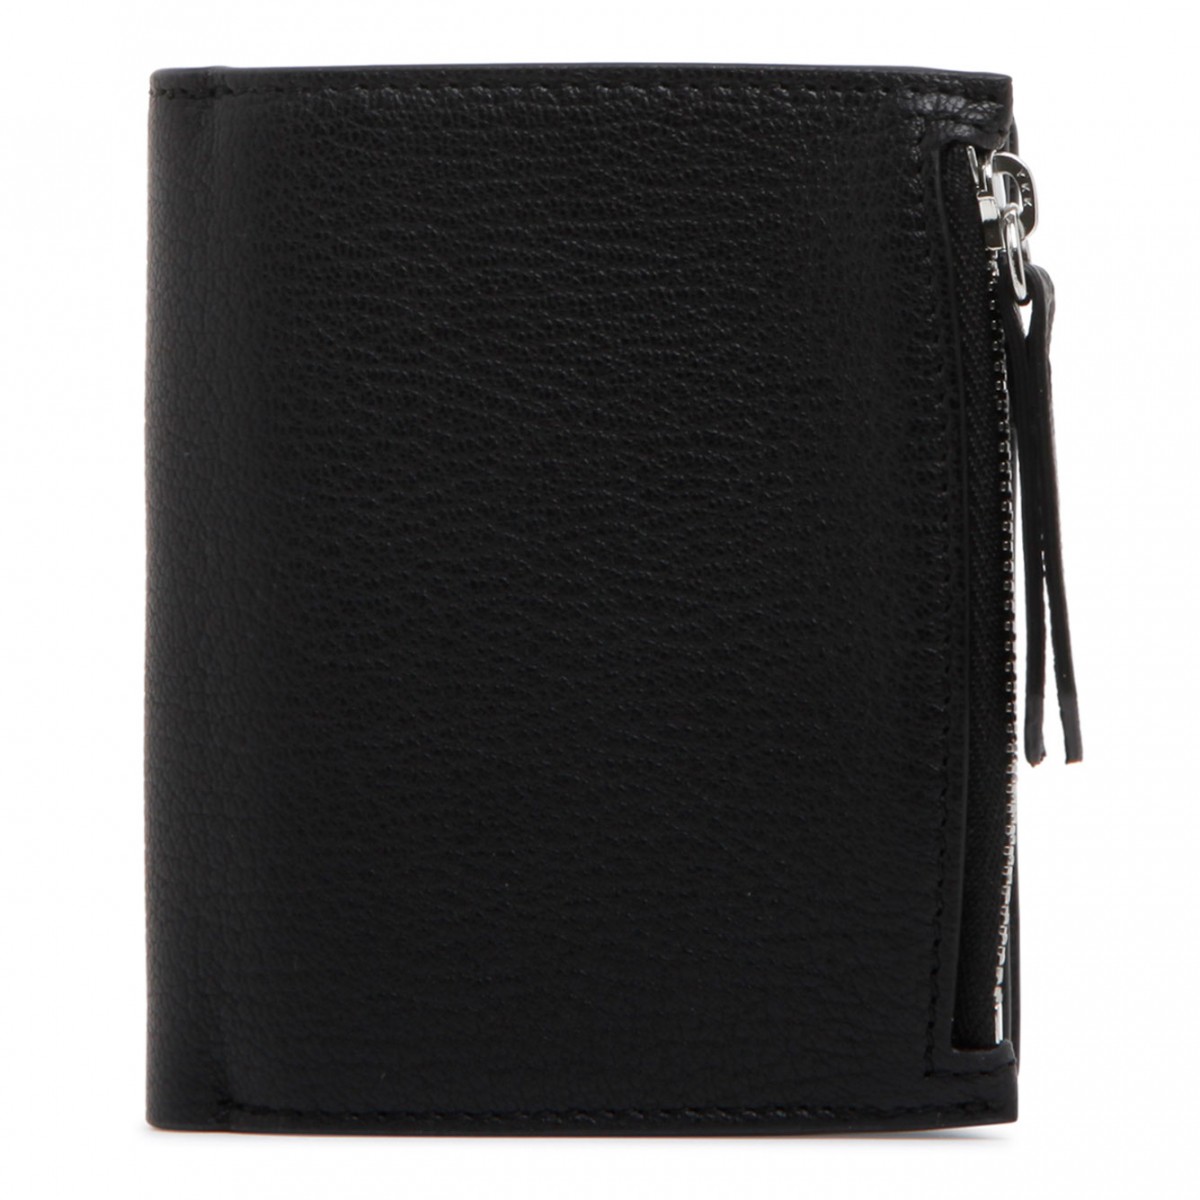 Maison Margiela Black Calf Leather Bif Fold Wallet.